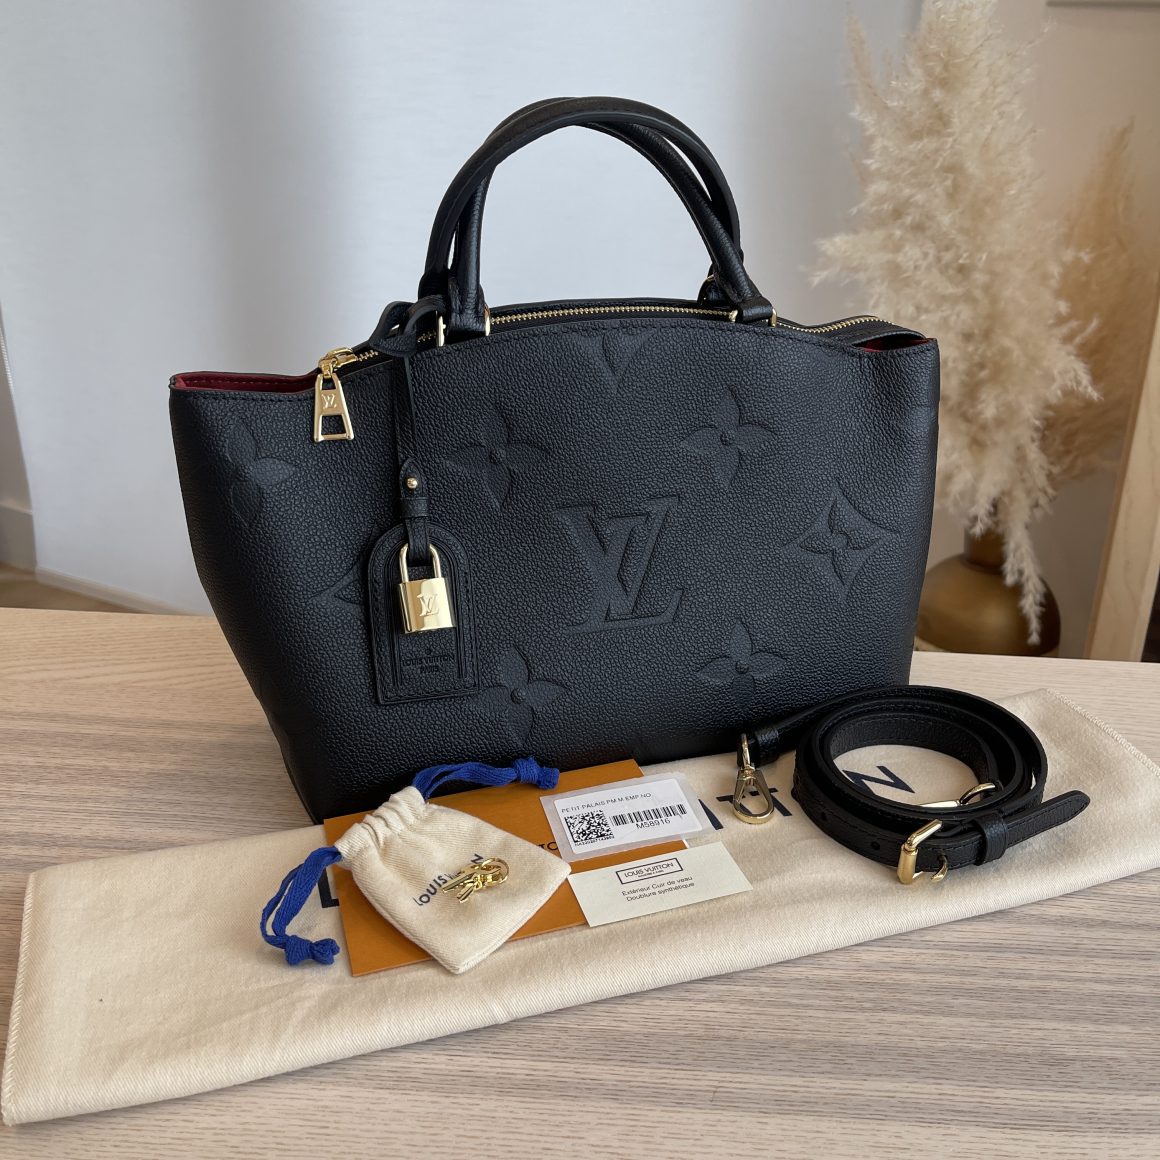 Louis Vuitton Petit Palais Black/Noir Handbag, 11.4 x 7.1 x 4.9 inches